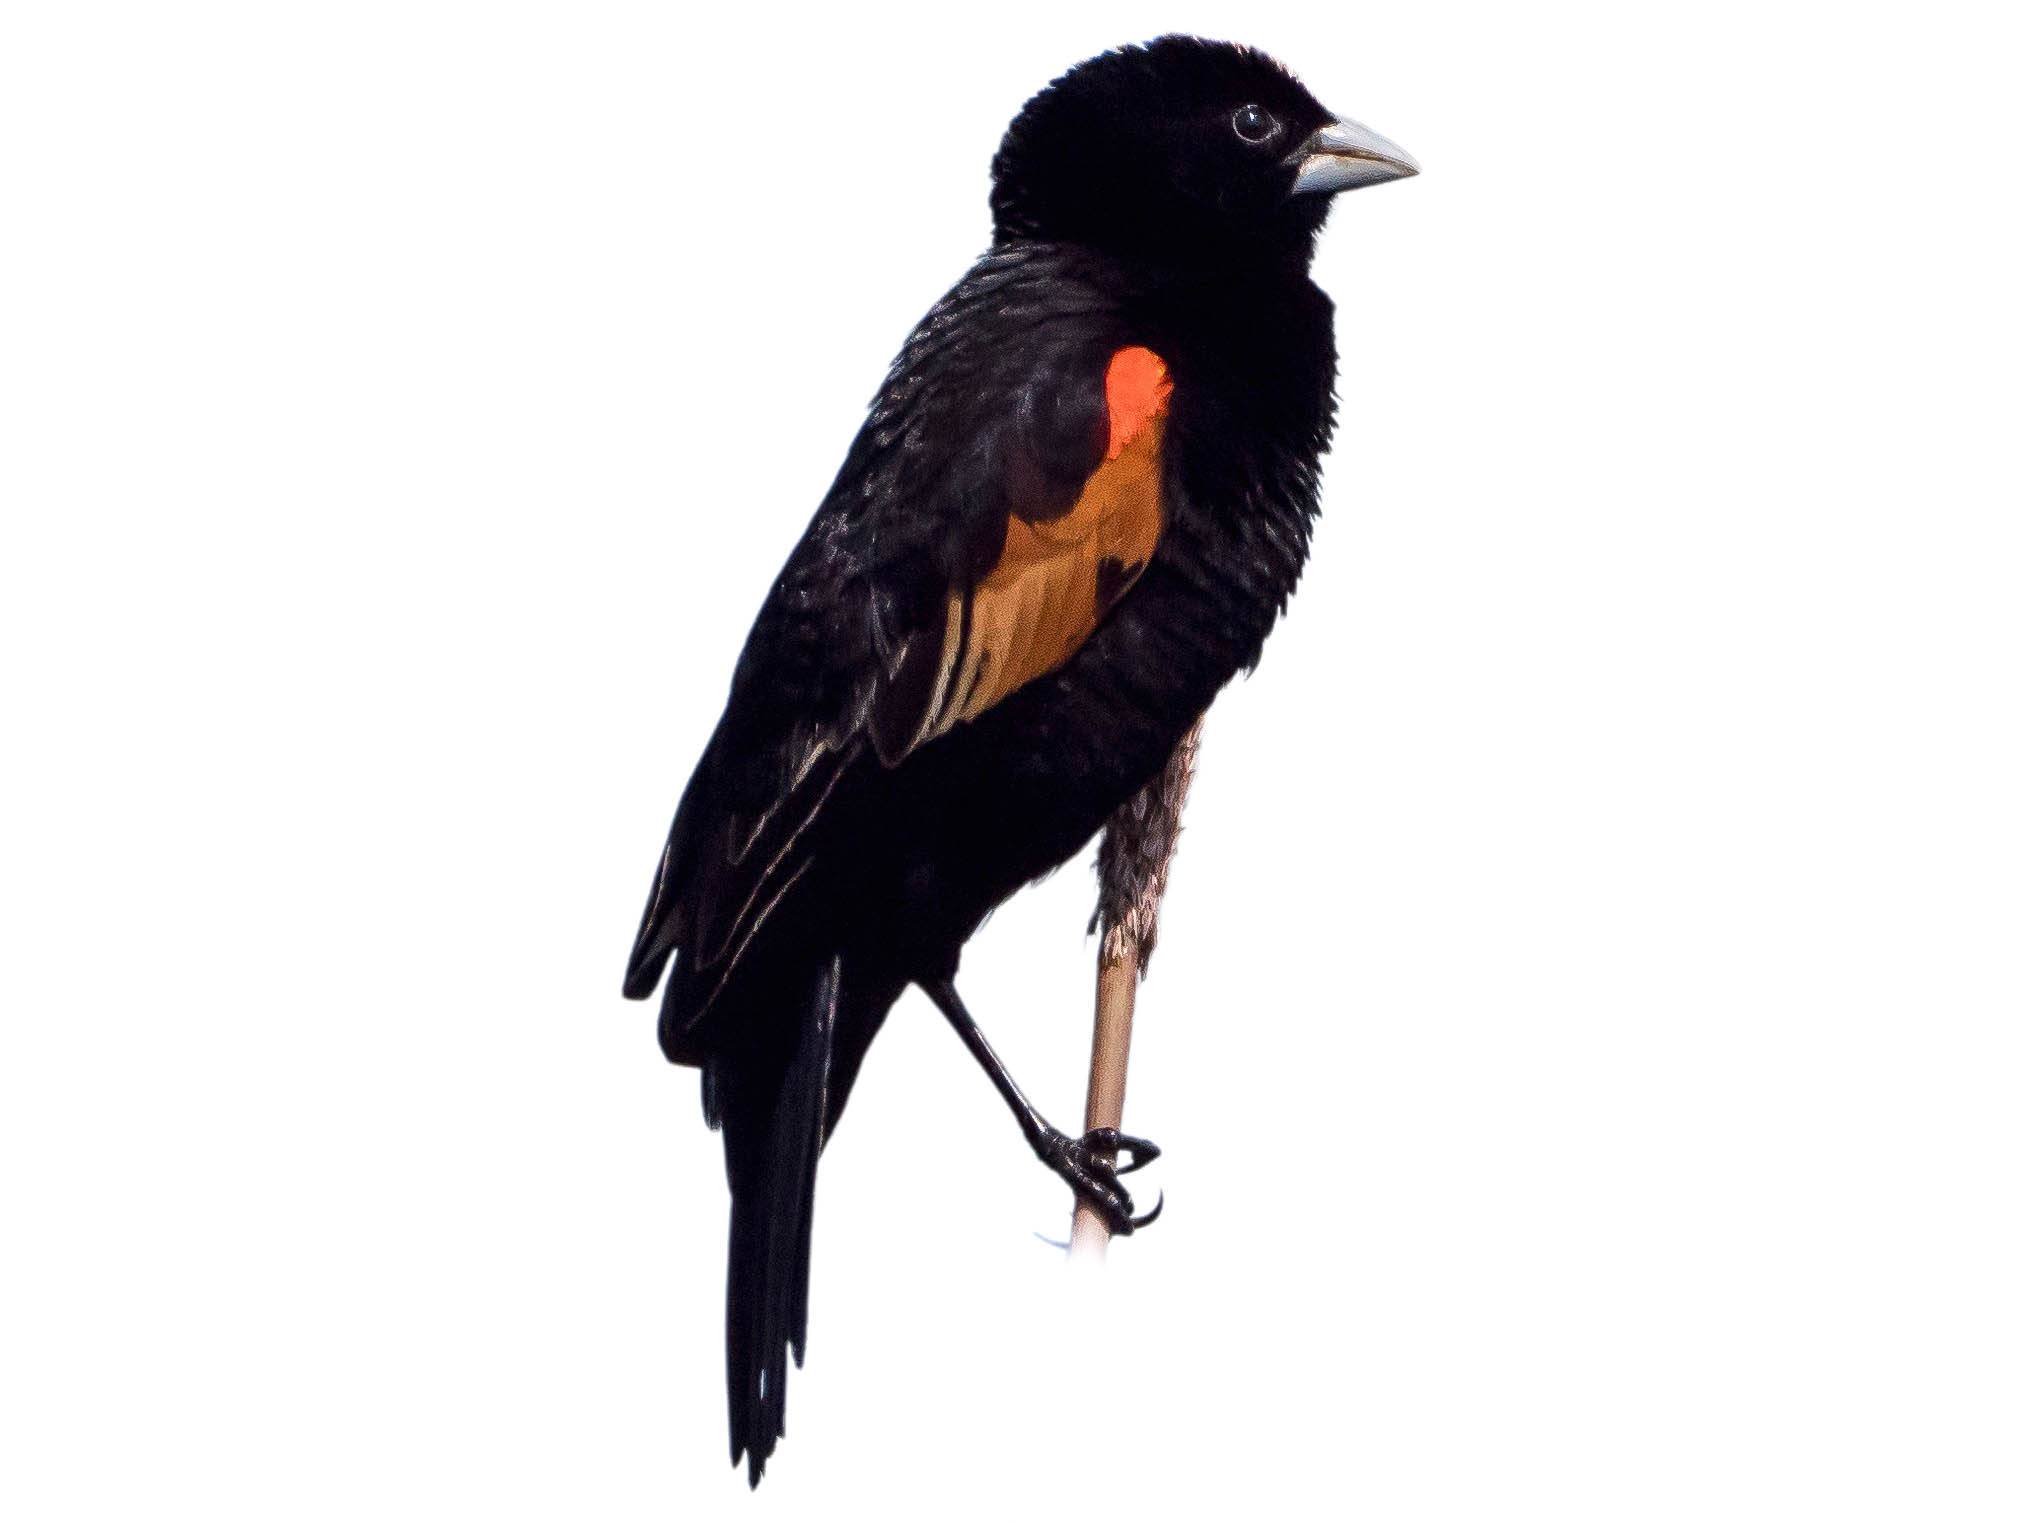 A photo of a Fan-tailed Widowbird (Euplectes axillaris), male